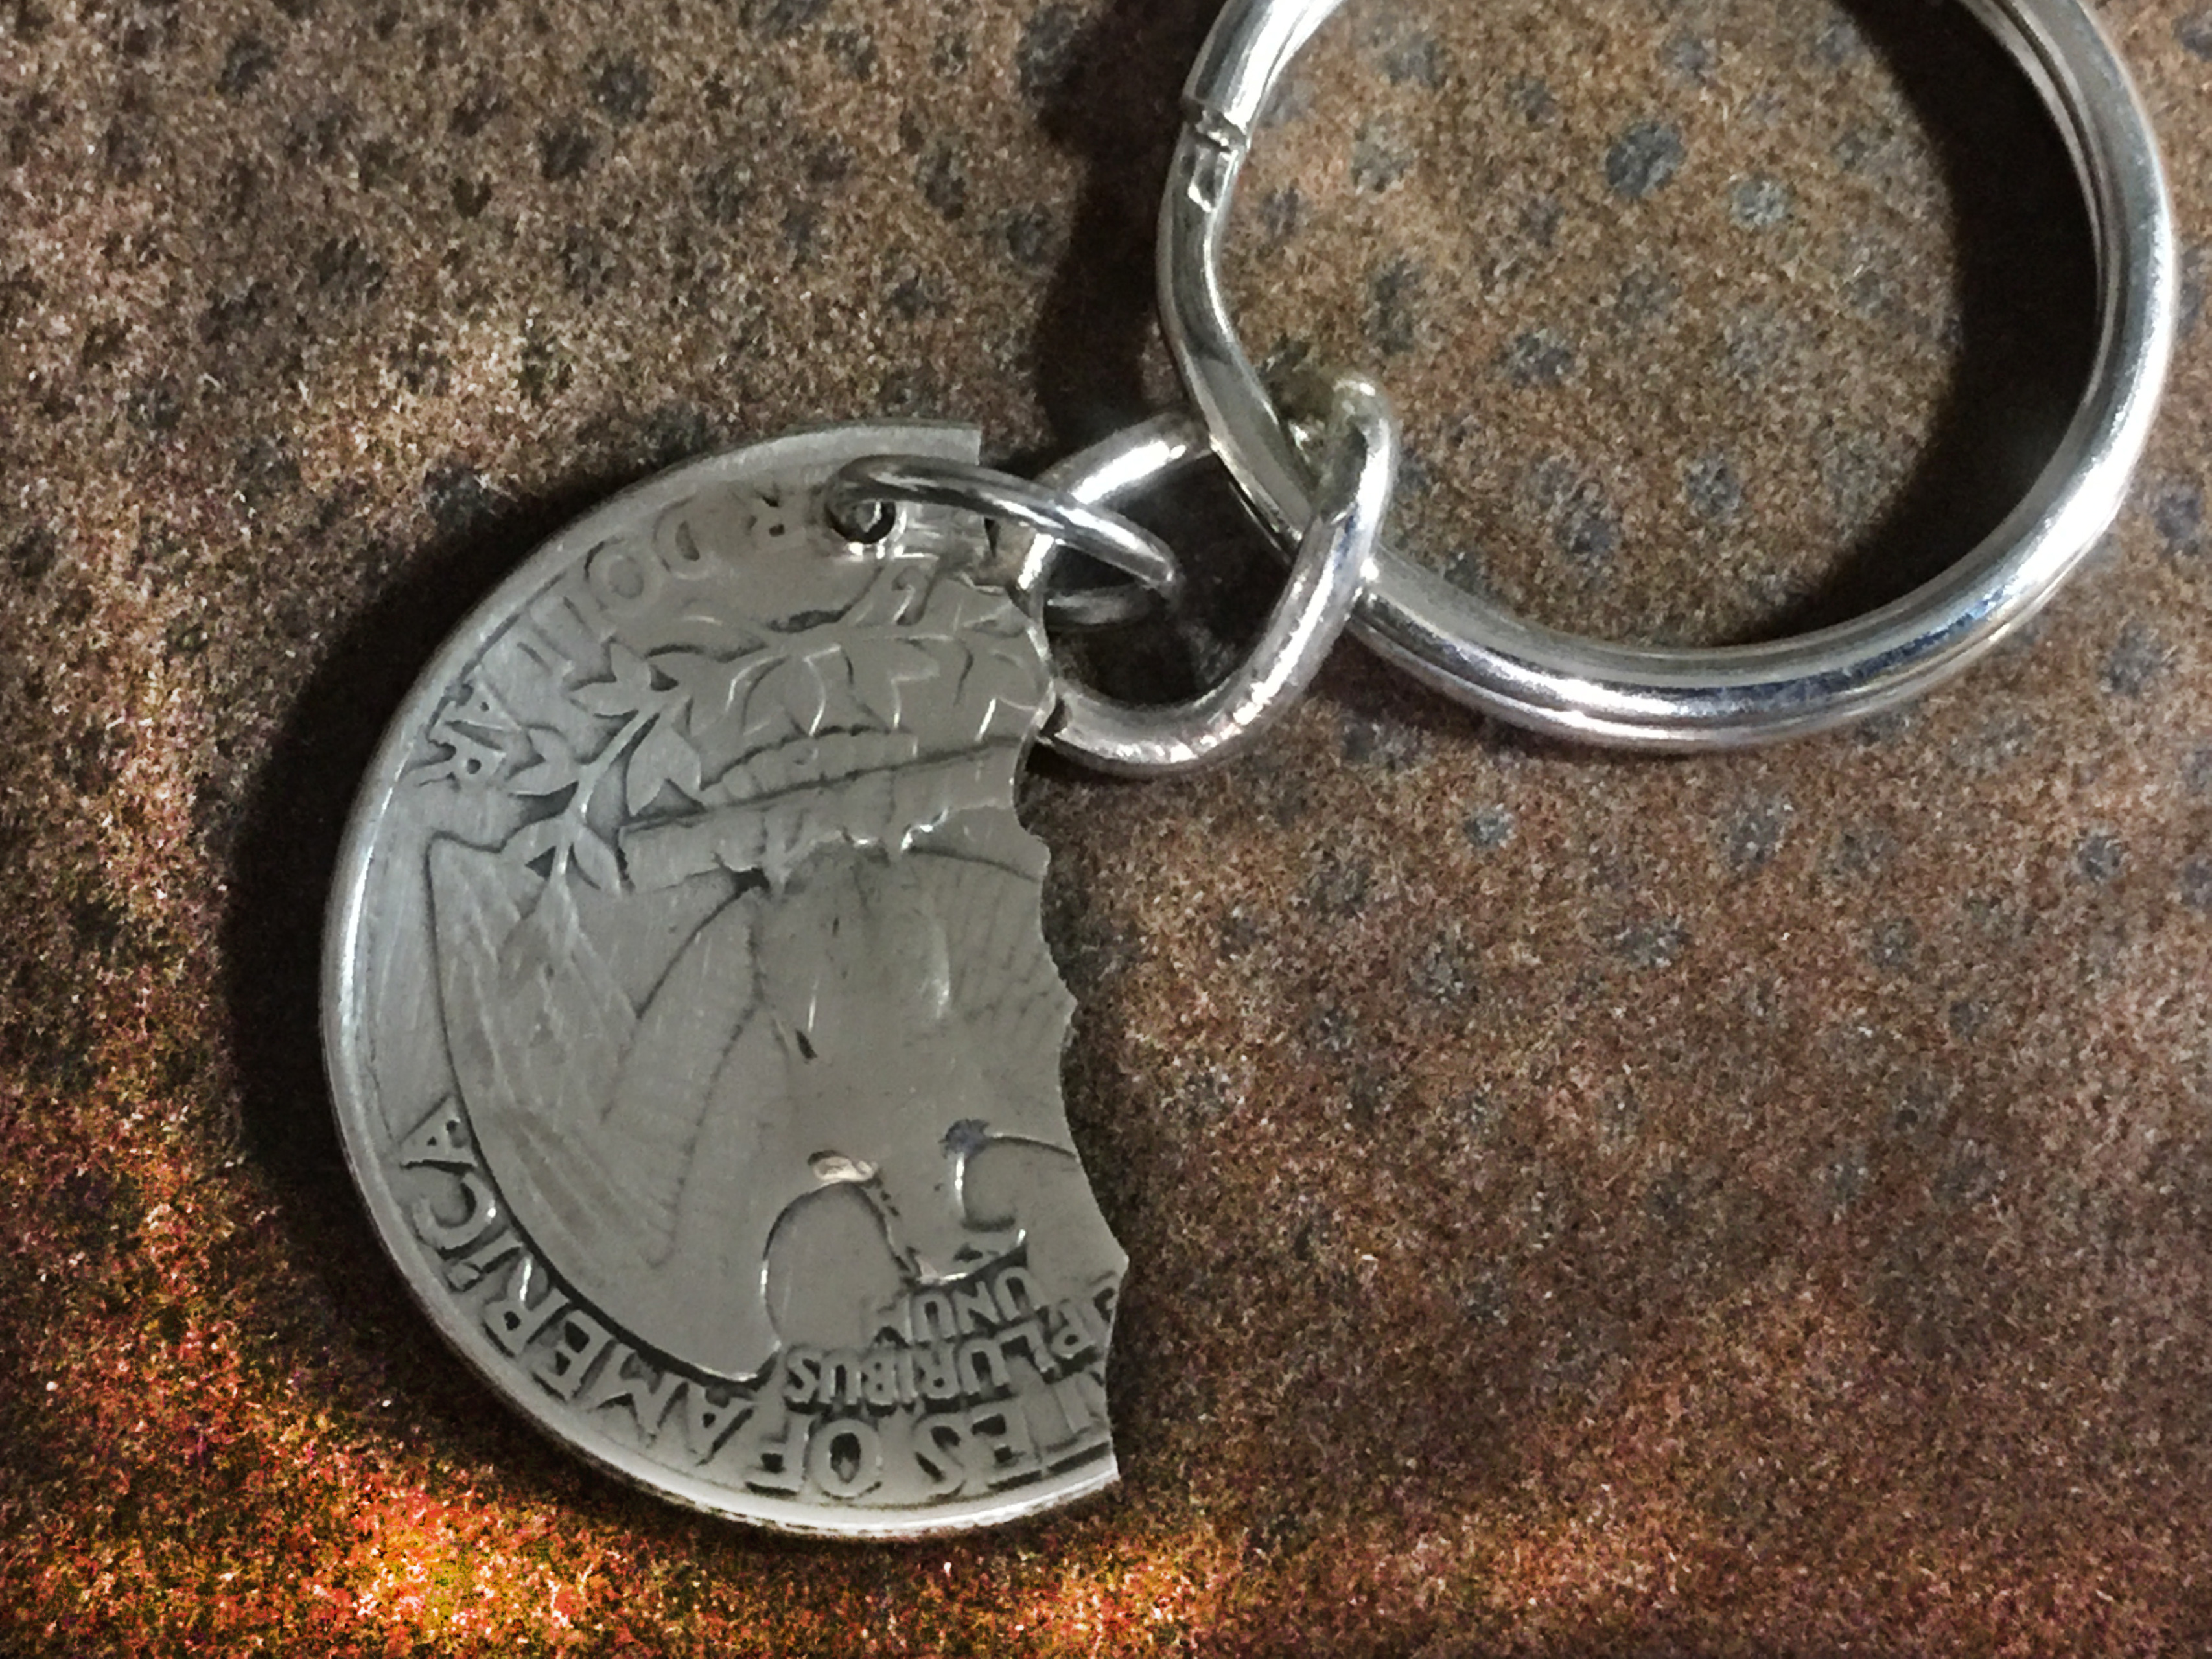 Roadrunner Keyring Keychain Cut In A Quarter Coin